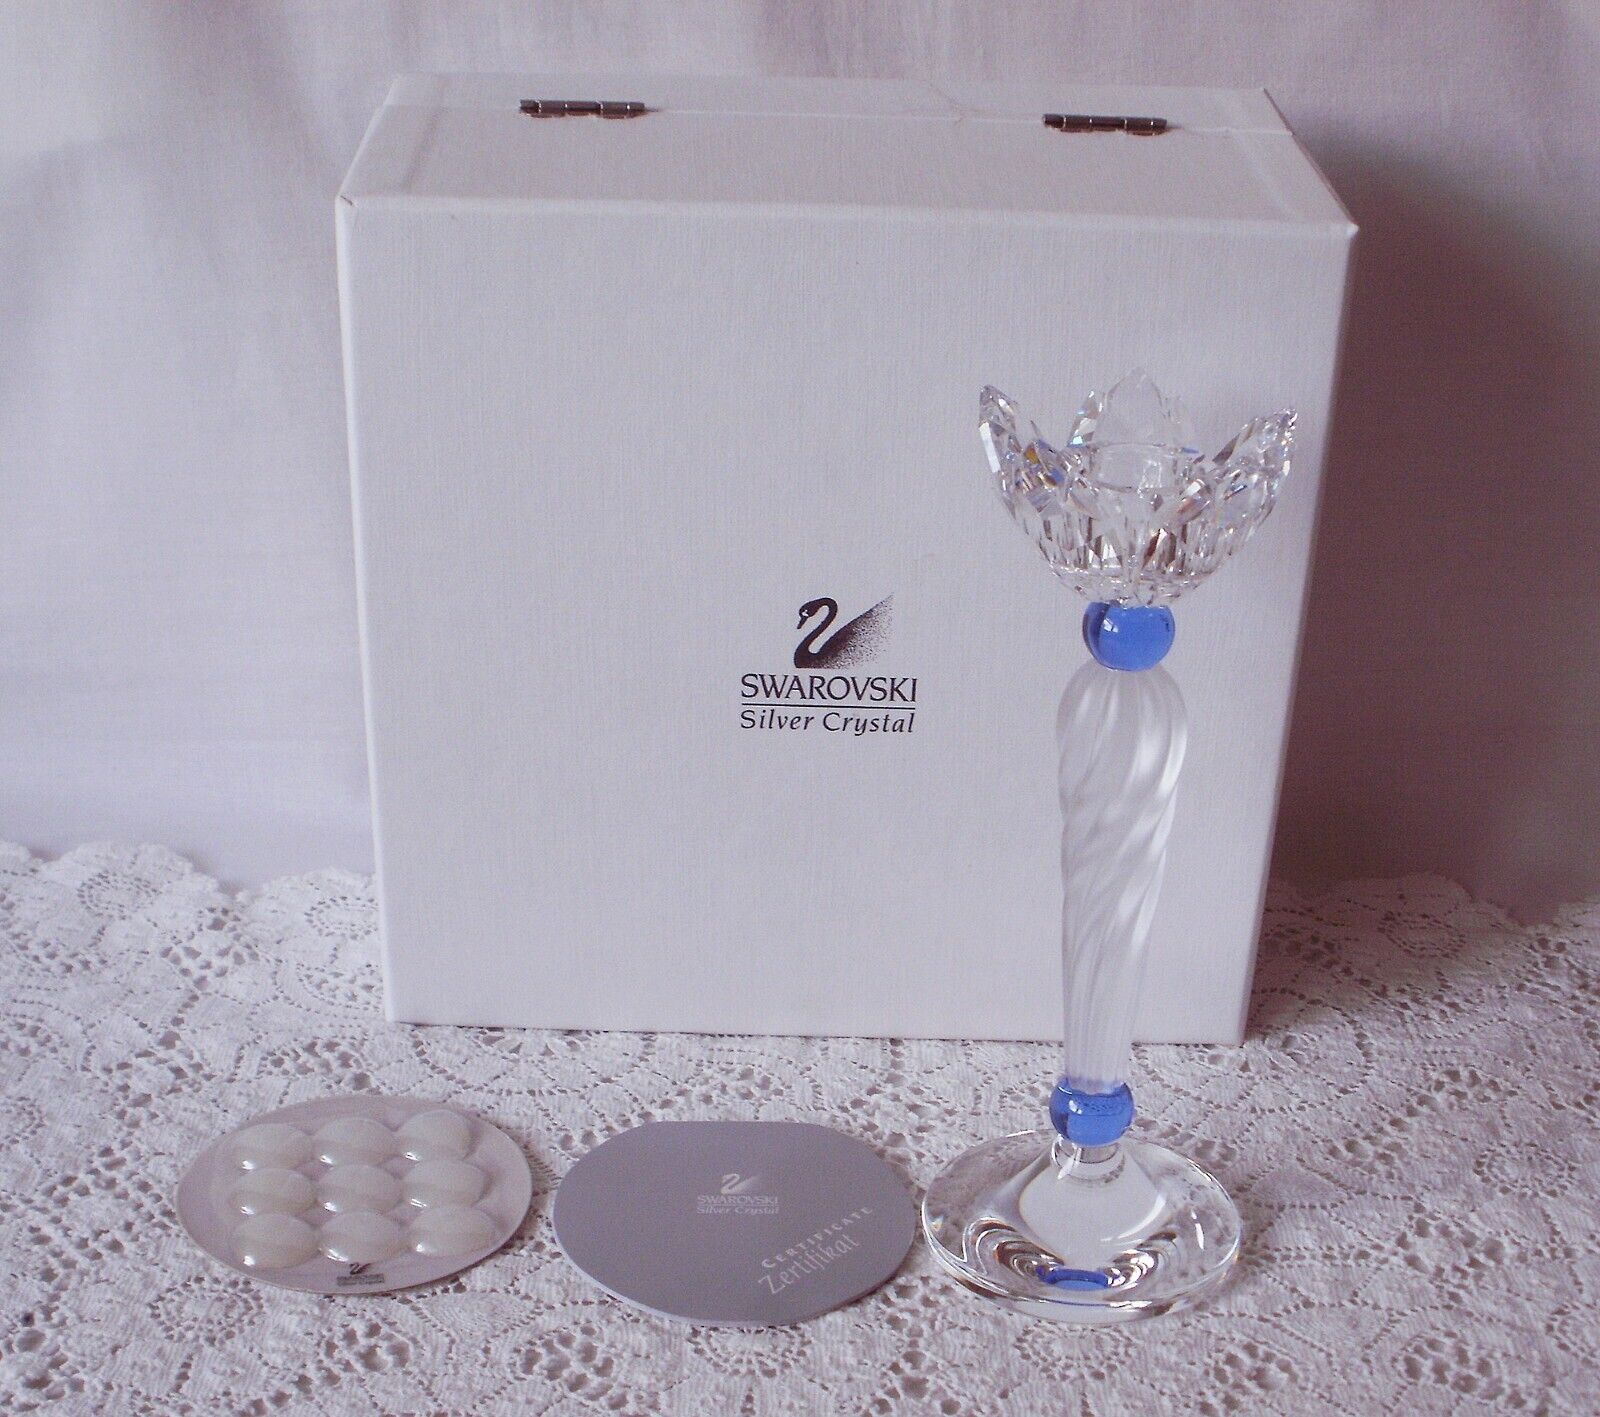 Swarovski Silver Crystal Blue Candle Holder, All Original Boxes, Certificate